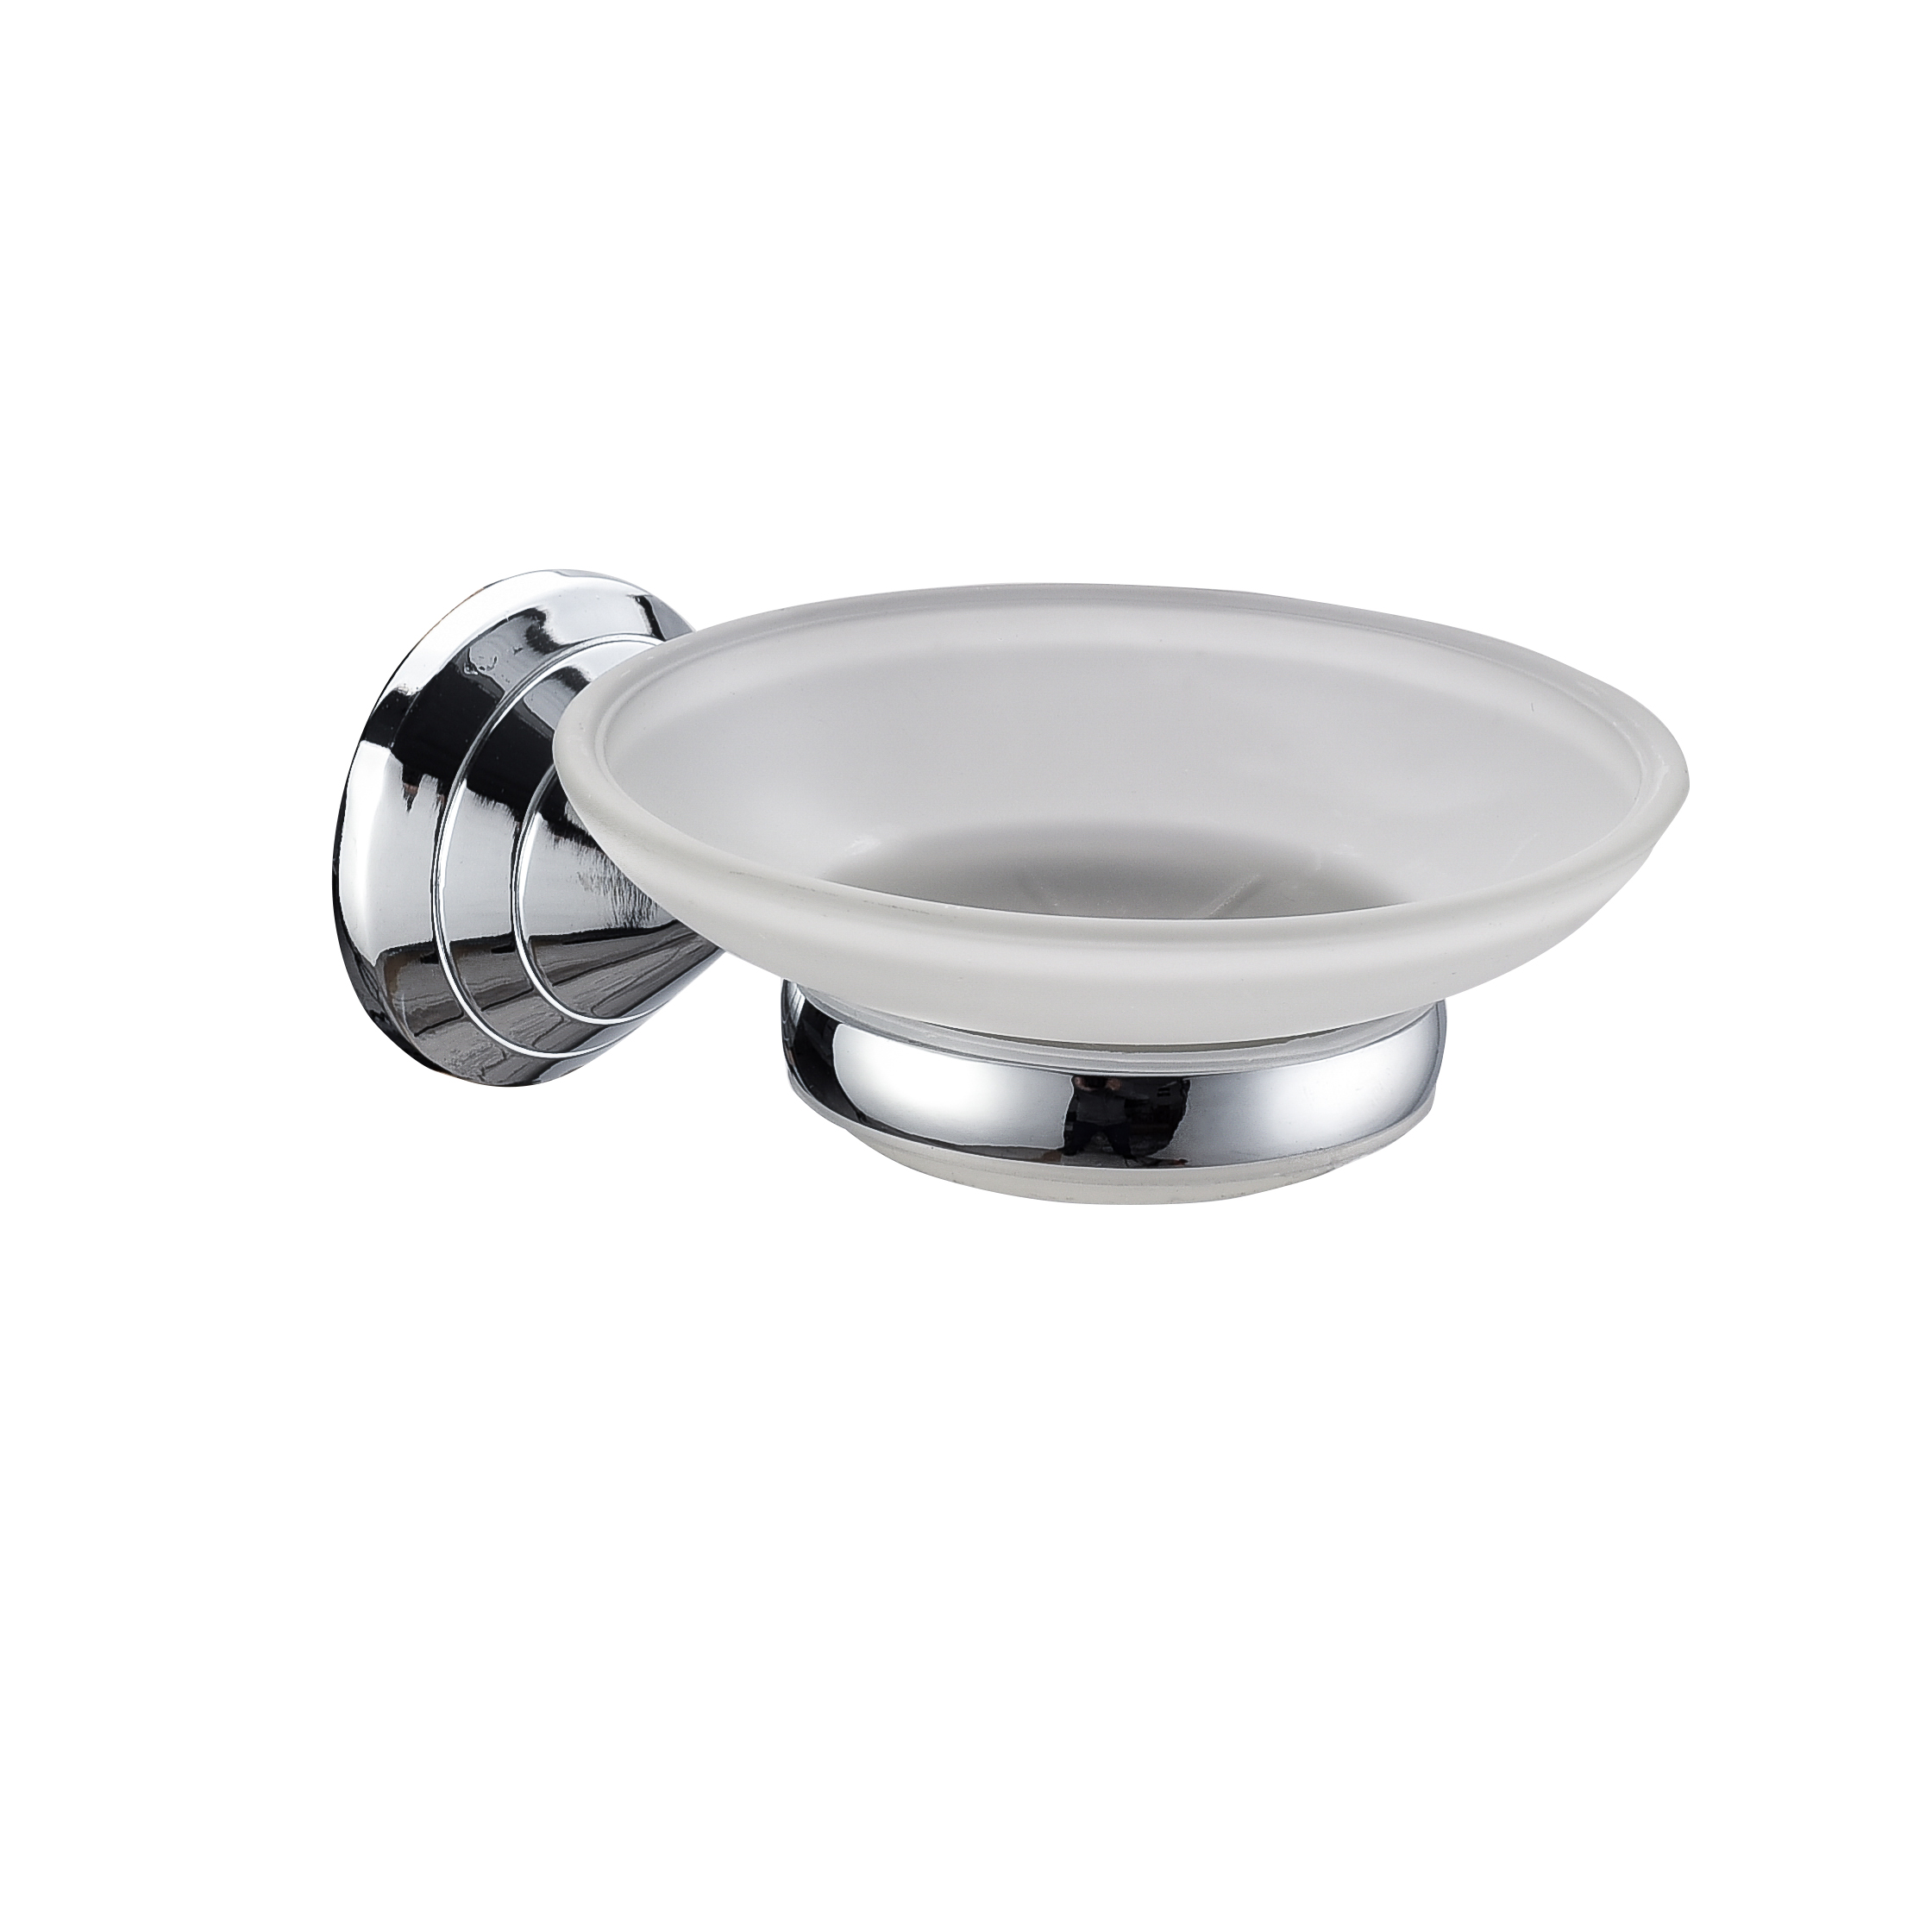 Wholesale silver bath accessories Zinc Soap Basket Wall Mounted Soap Dish Holder 13204